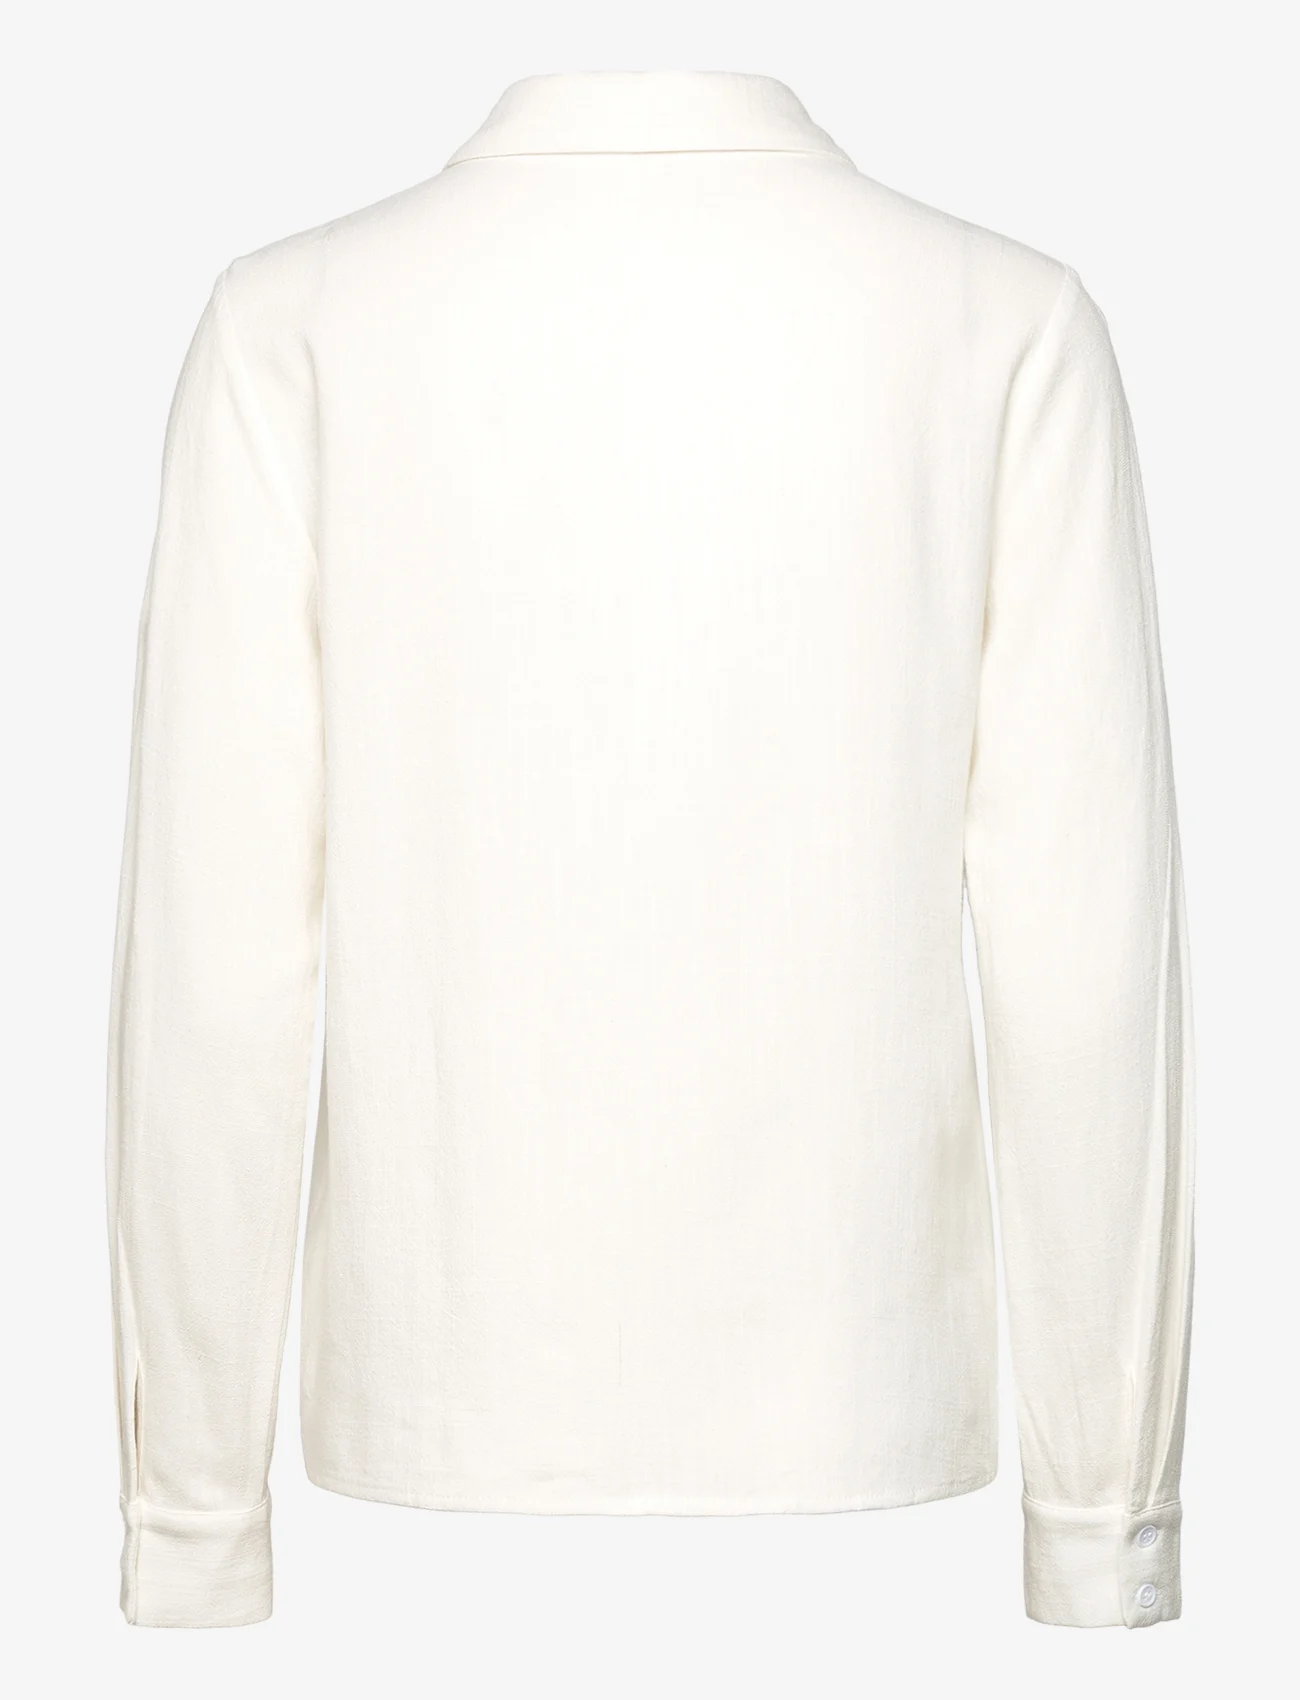 A-View - Lerke shirt - leinenhemden - white - 1